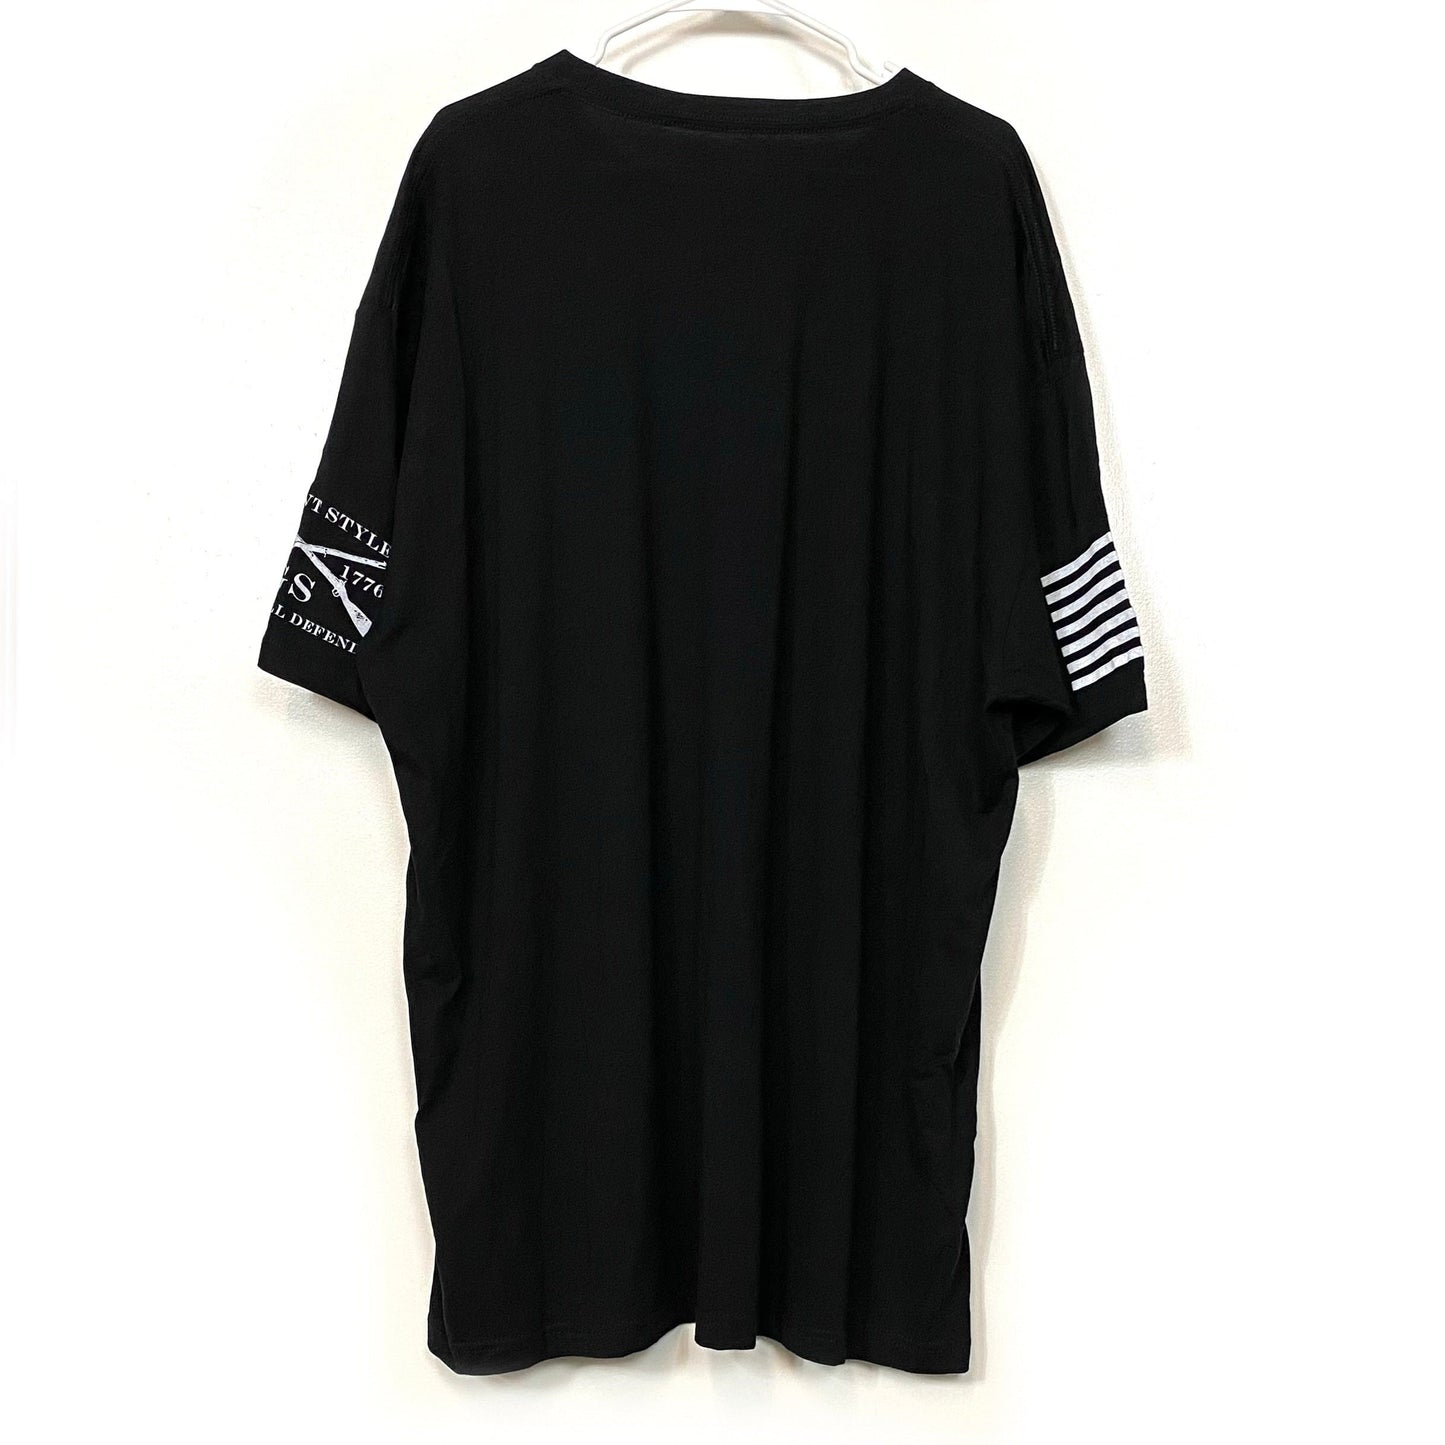 Grunt Style Mens Size XXXXL Black T-Shirt S/s - ‘American Spartan 2.0’ NEW